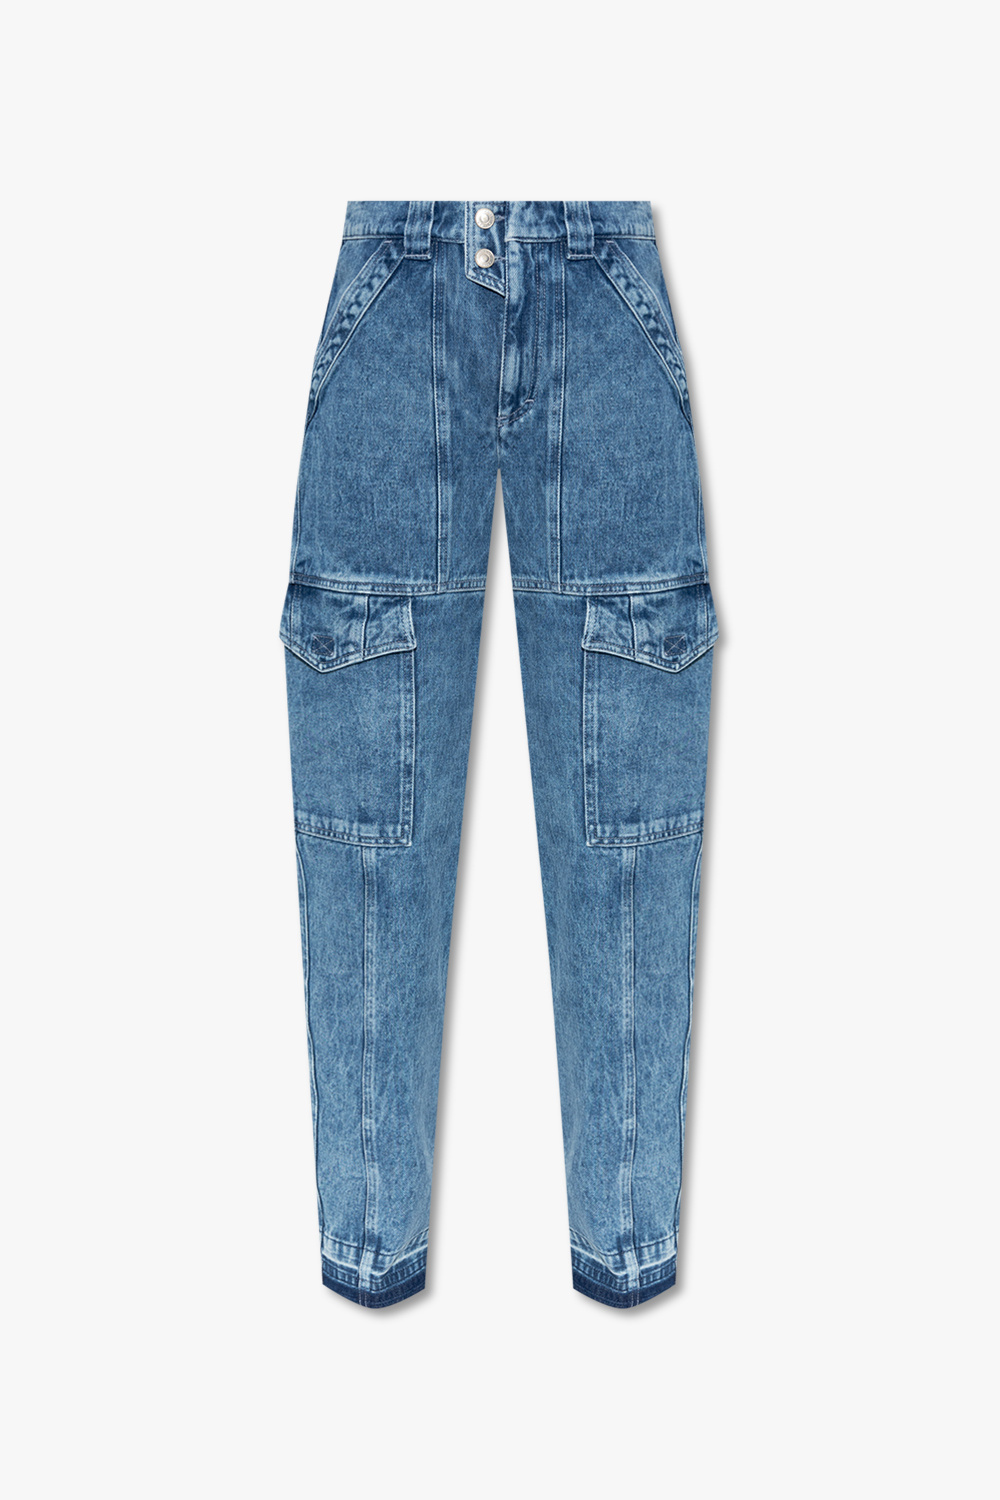 Marant Etoile ‘Vayoneo’ cargo jeans